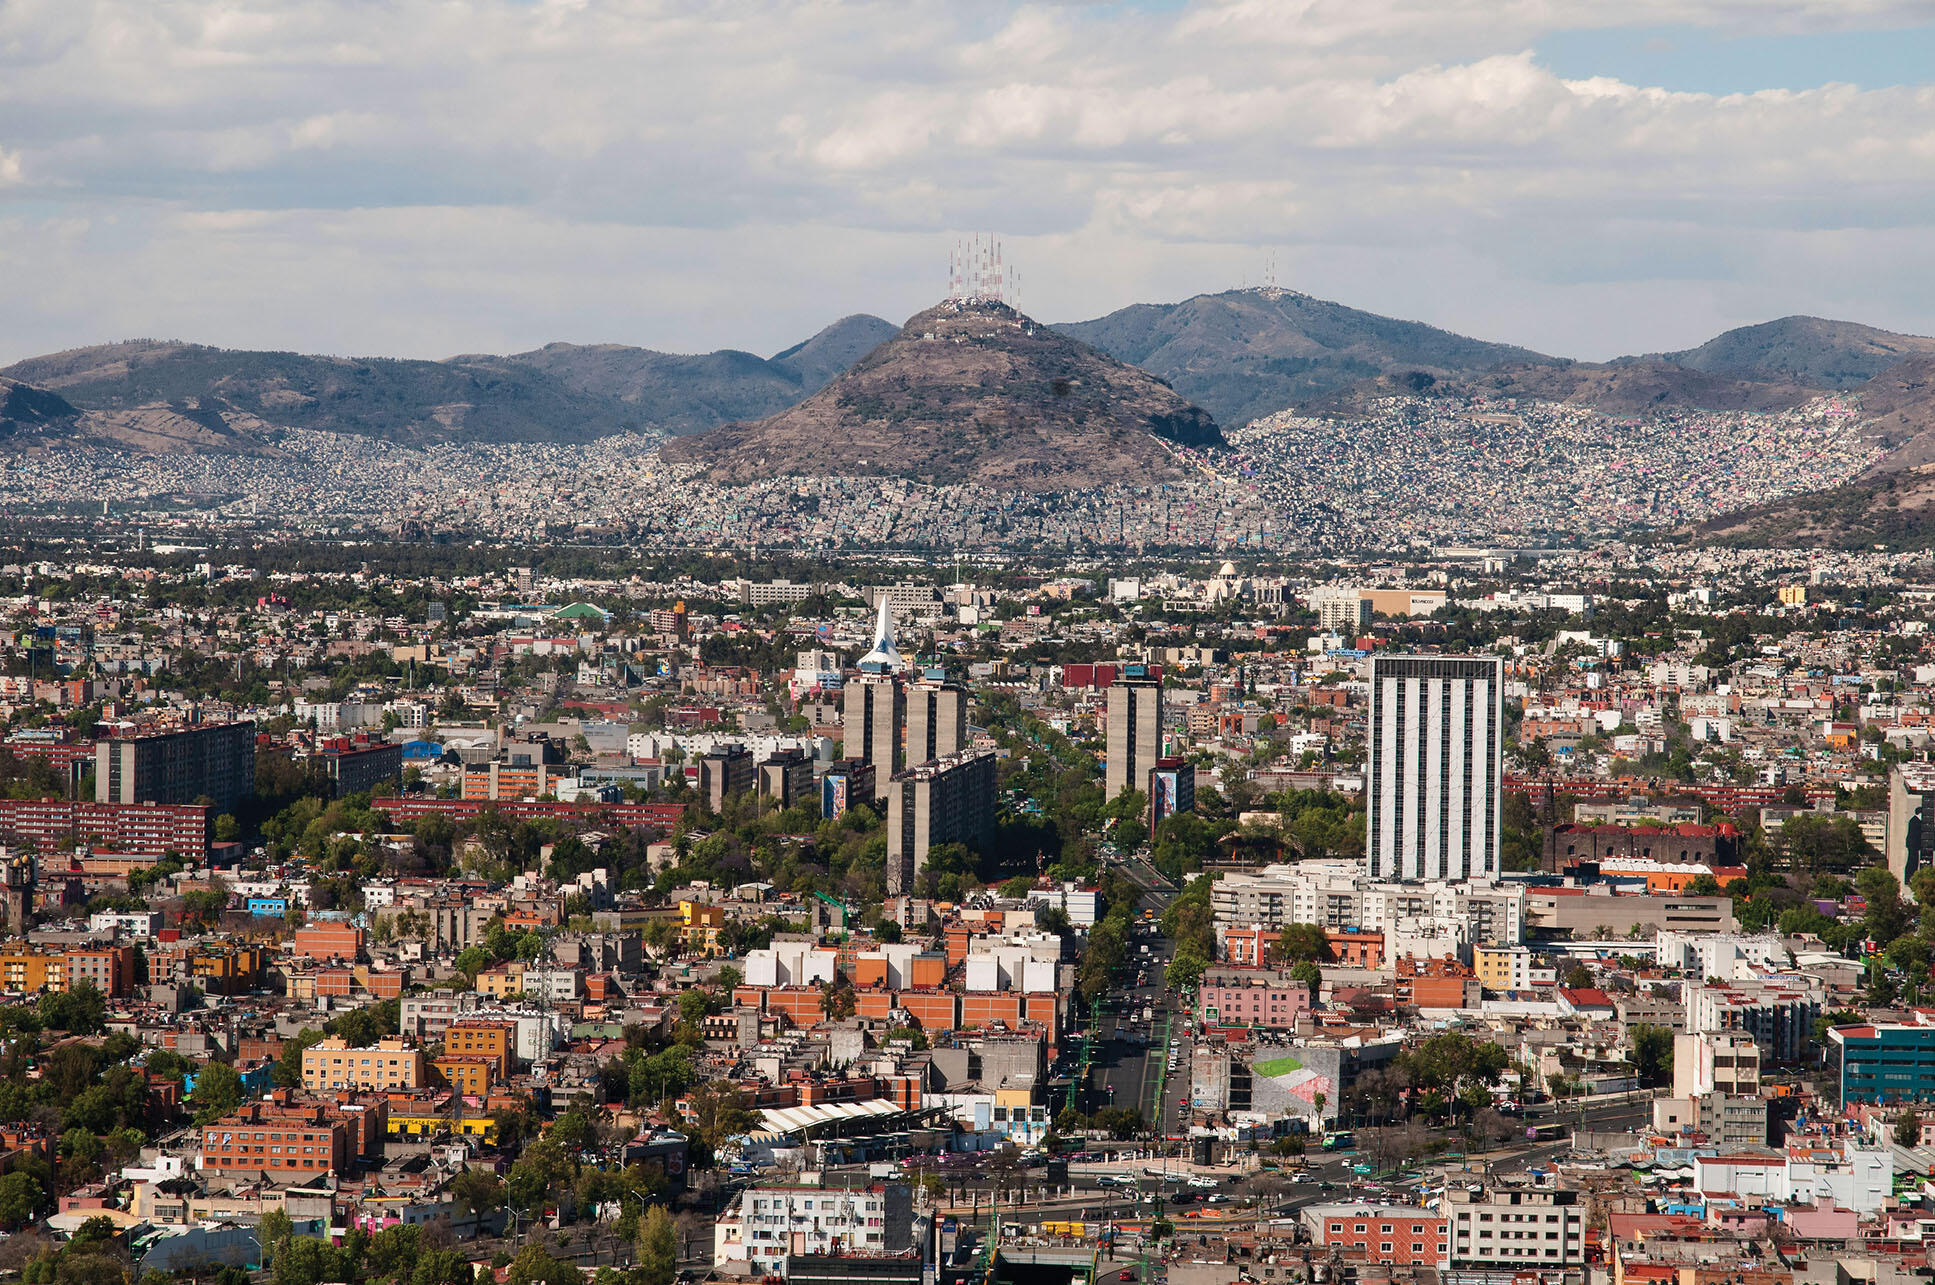  Wealthier neighborhoods on flat land, poorer ones climb the hills. (Photo by Eneas de Troya.)